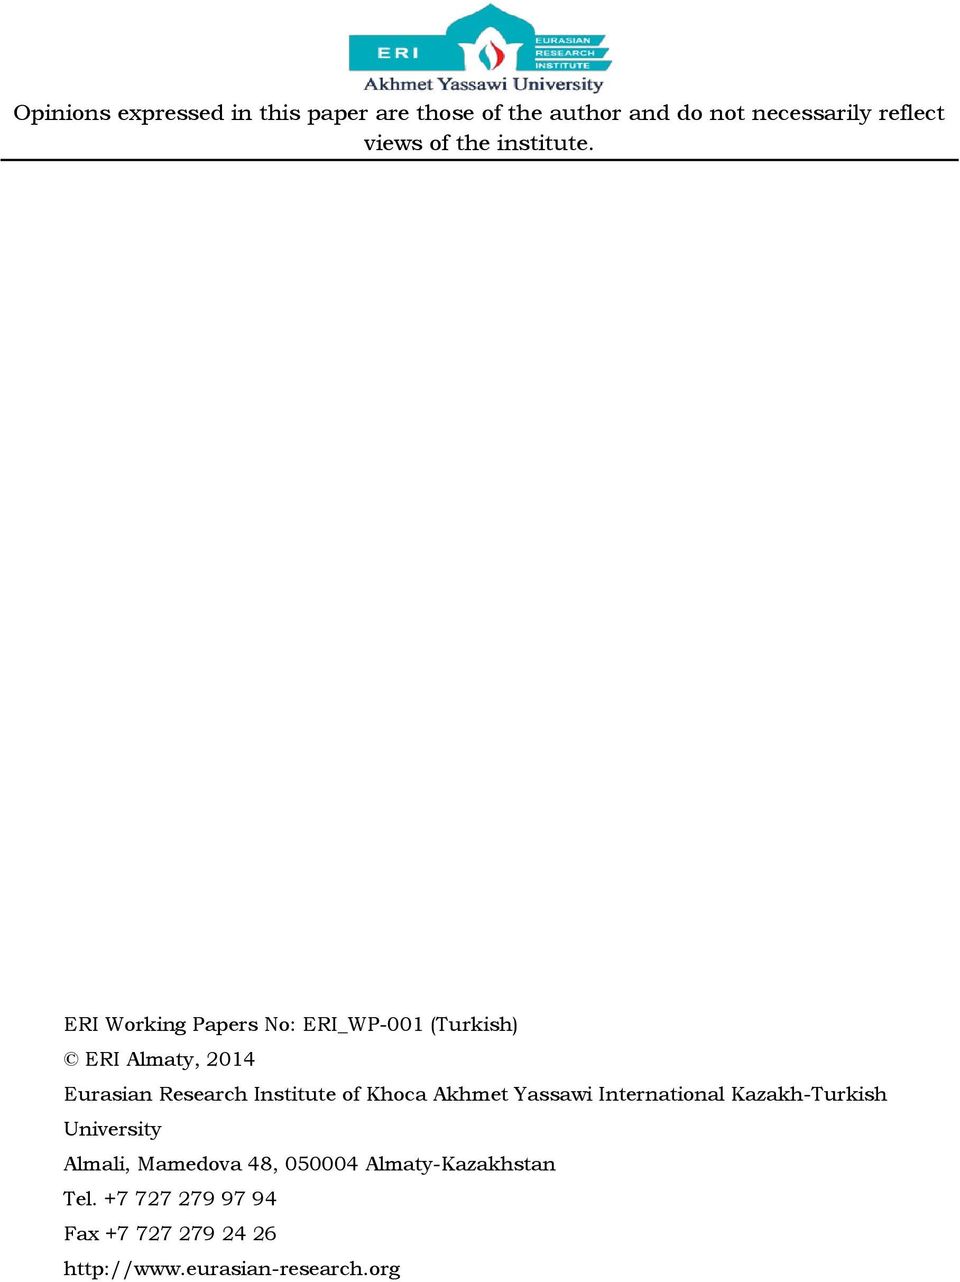 ERI Working Papers No: ERI_WP-001 (Turkish) ERI Almaty, 2014 Eurasian Research Institute of